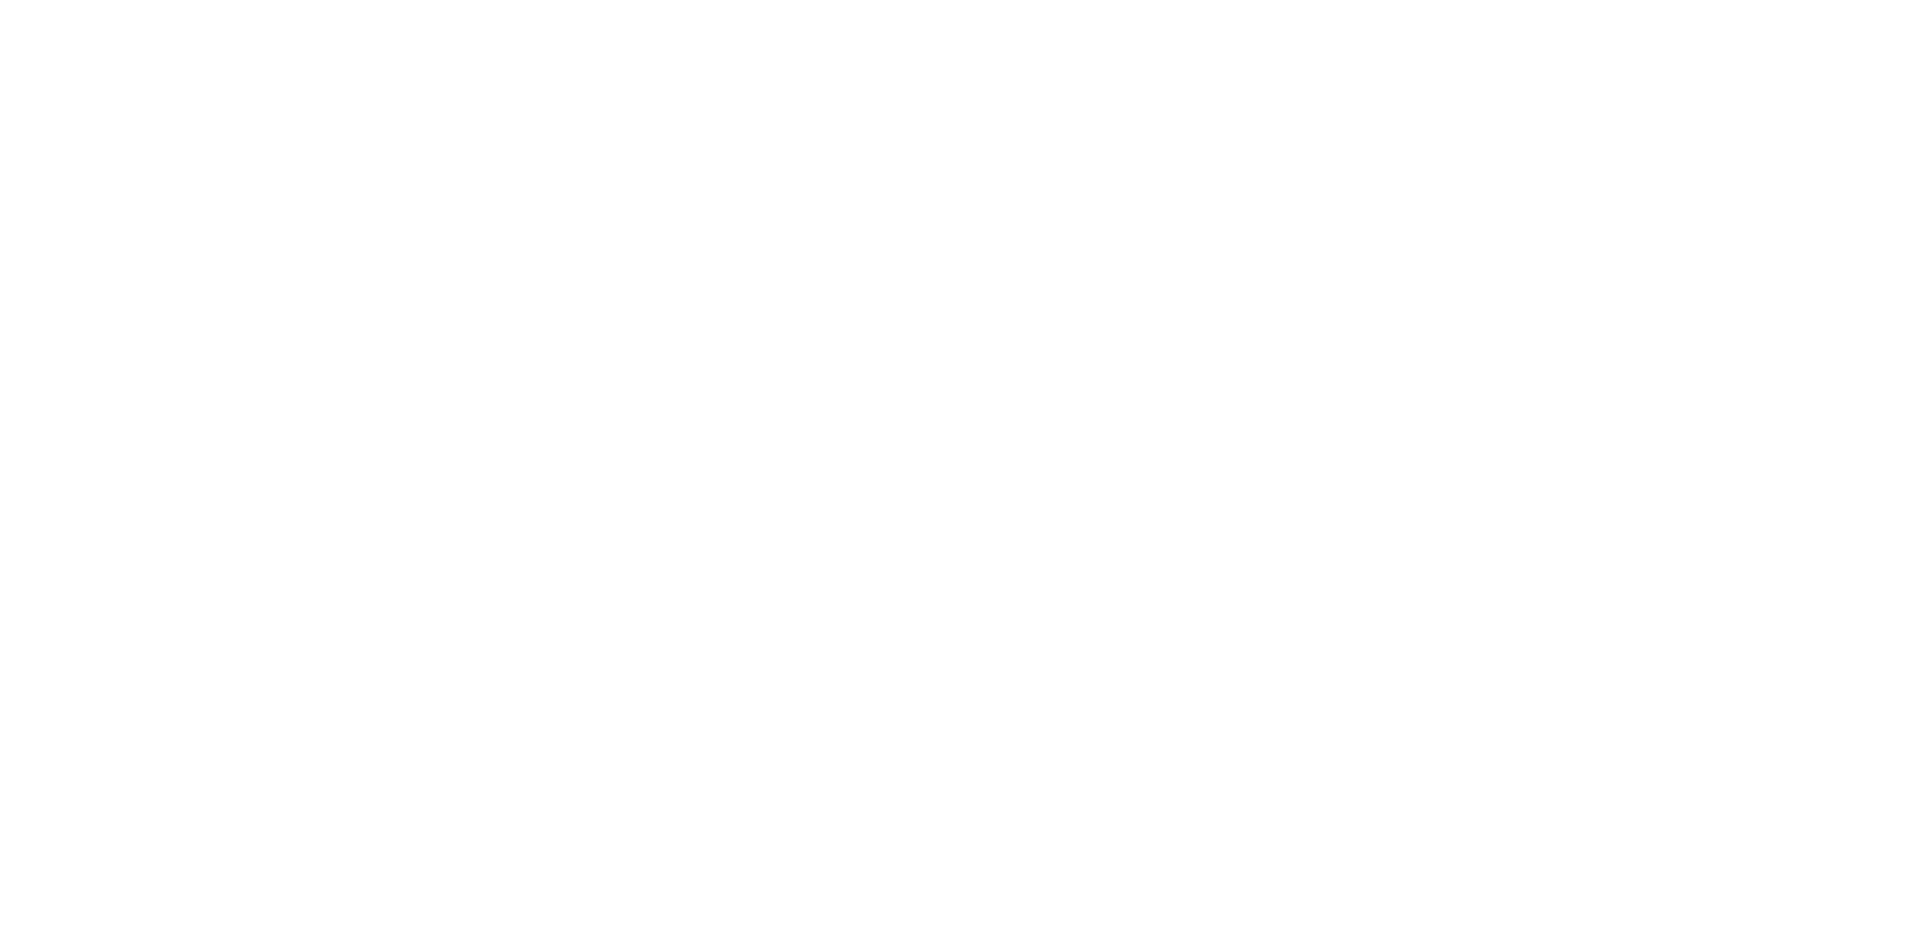 Modern General Dreamy Coffee Co.